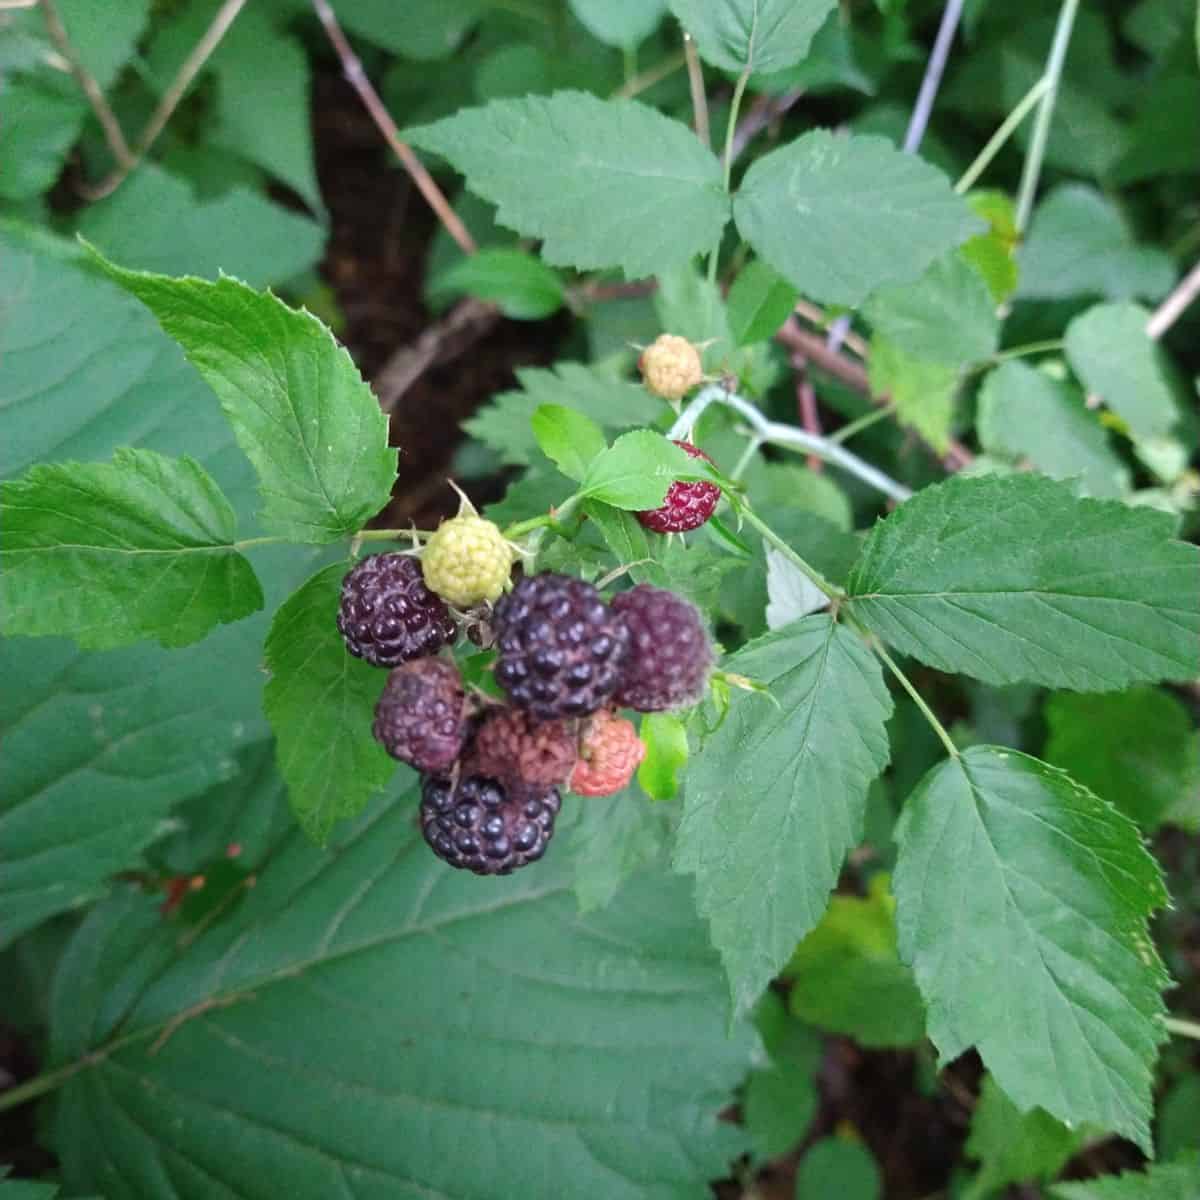 Wild black raspberries ripening on the plant.